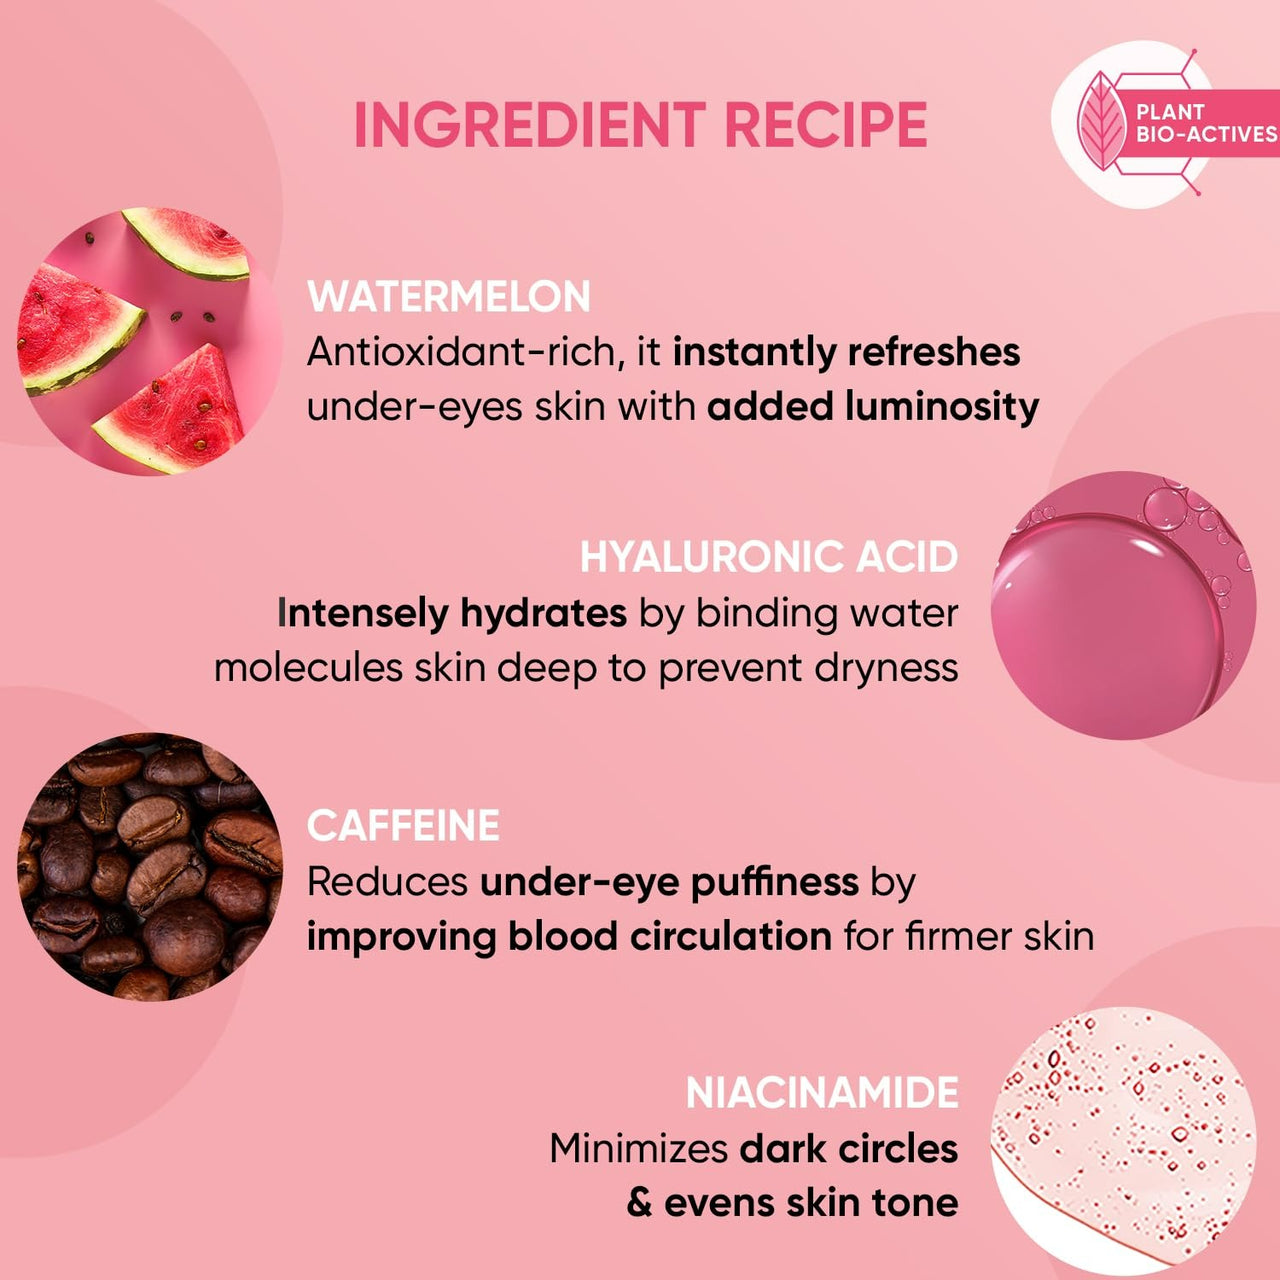 Dot & Key Watermelon Cooling Hydrogel Eye Patches - Distacart